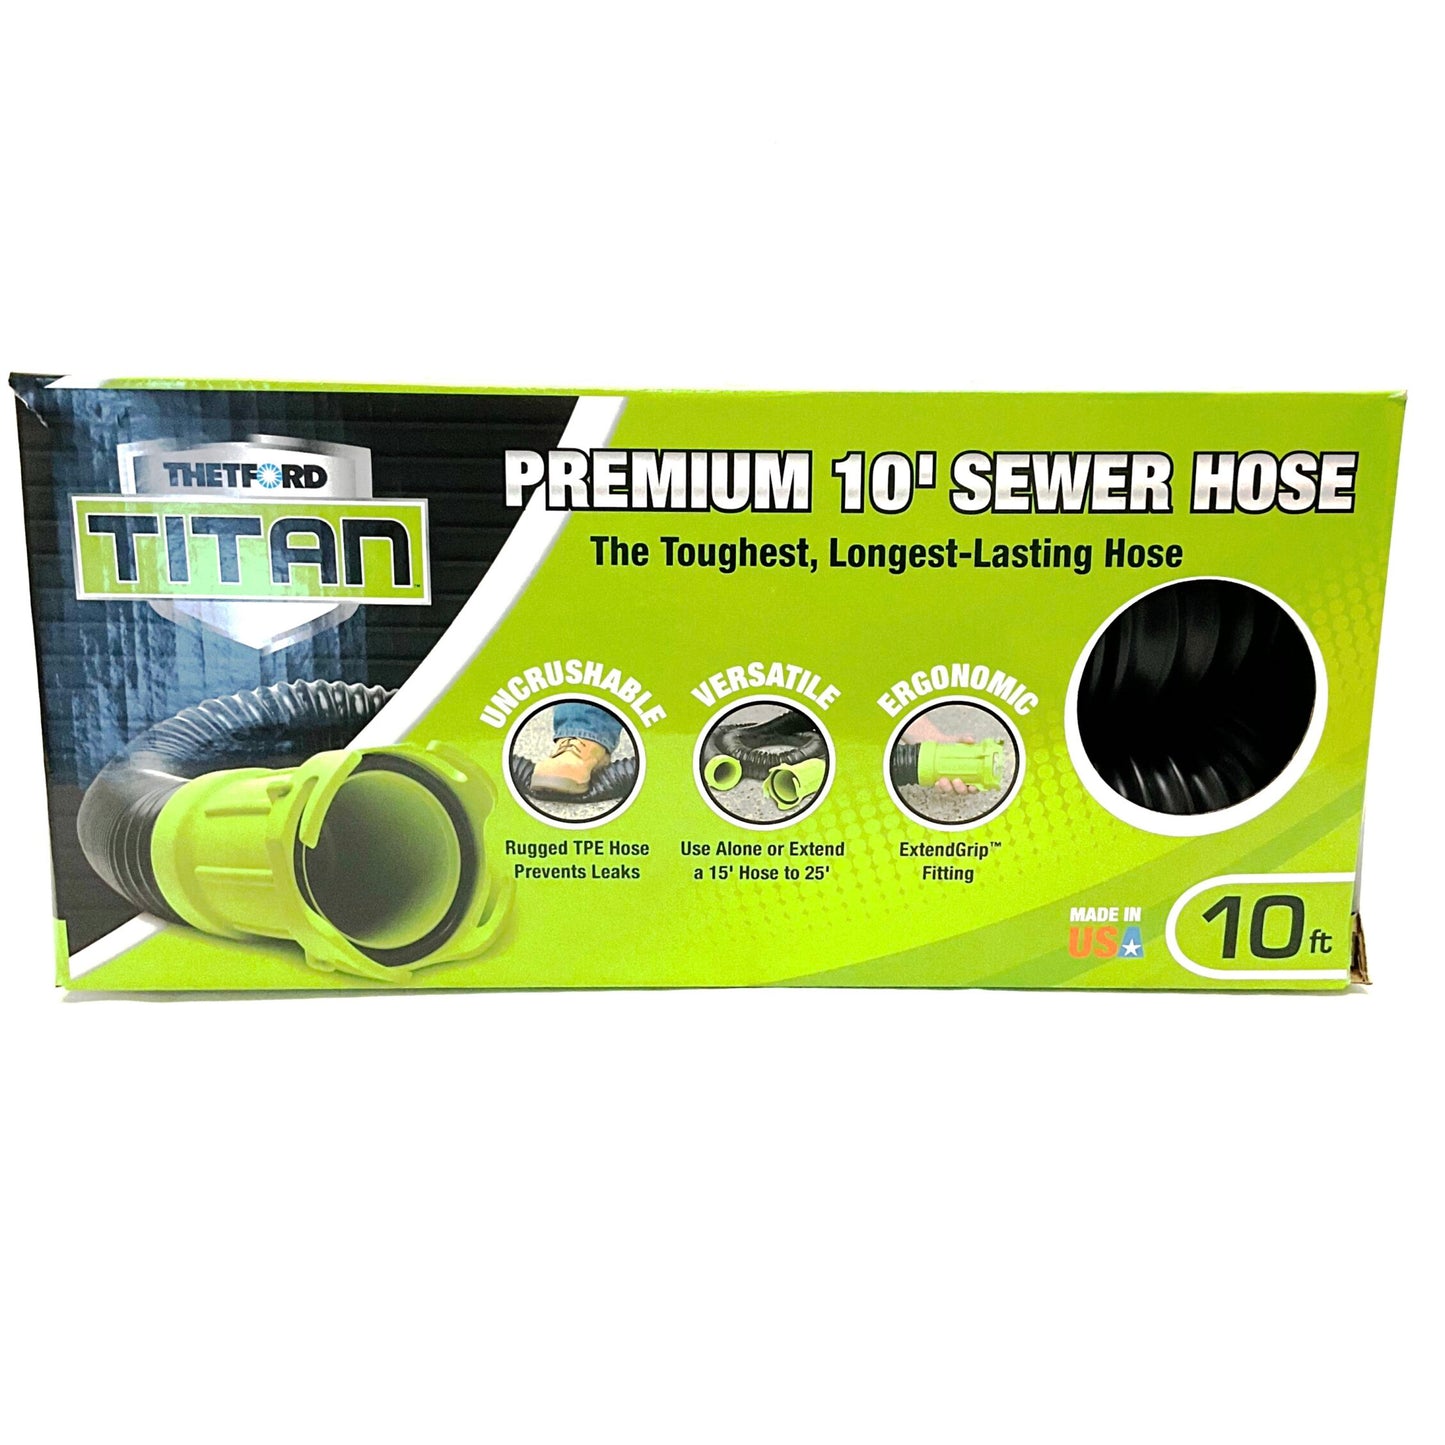 10’ Sewer Hose - TITAN